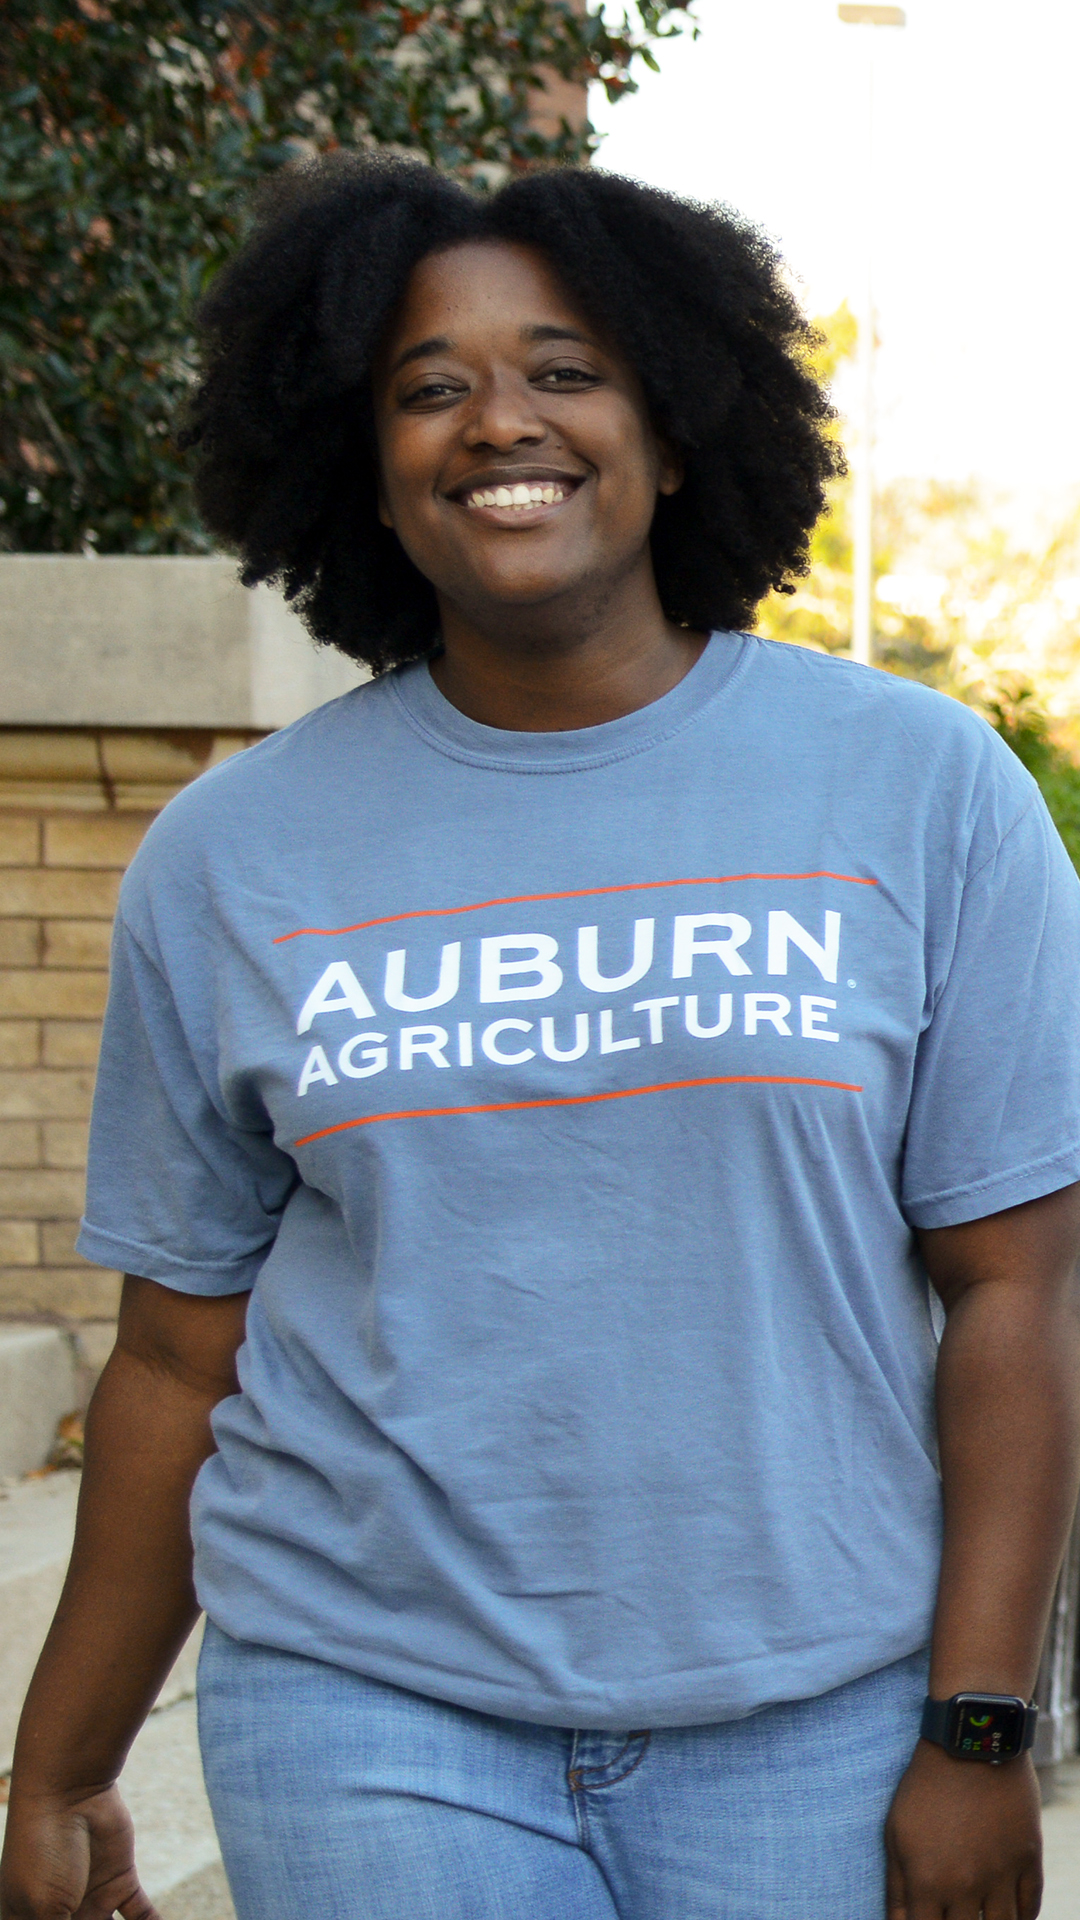 Auburn Ag, Soft Comfort, Blue T-Shirt, Agriculture store merch, student smiling